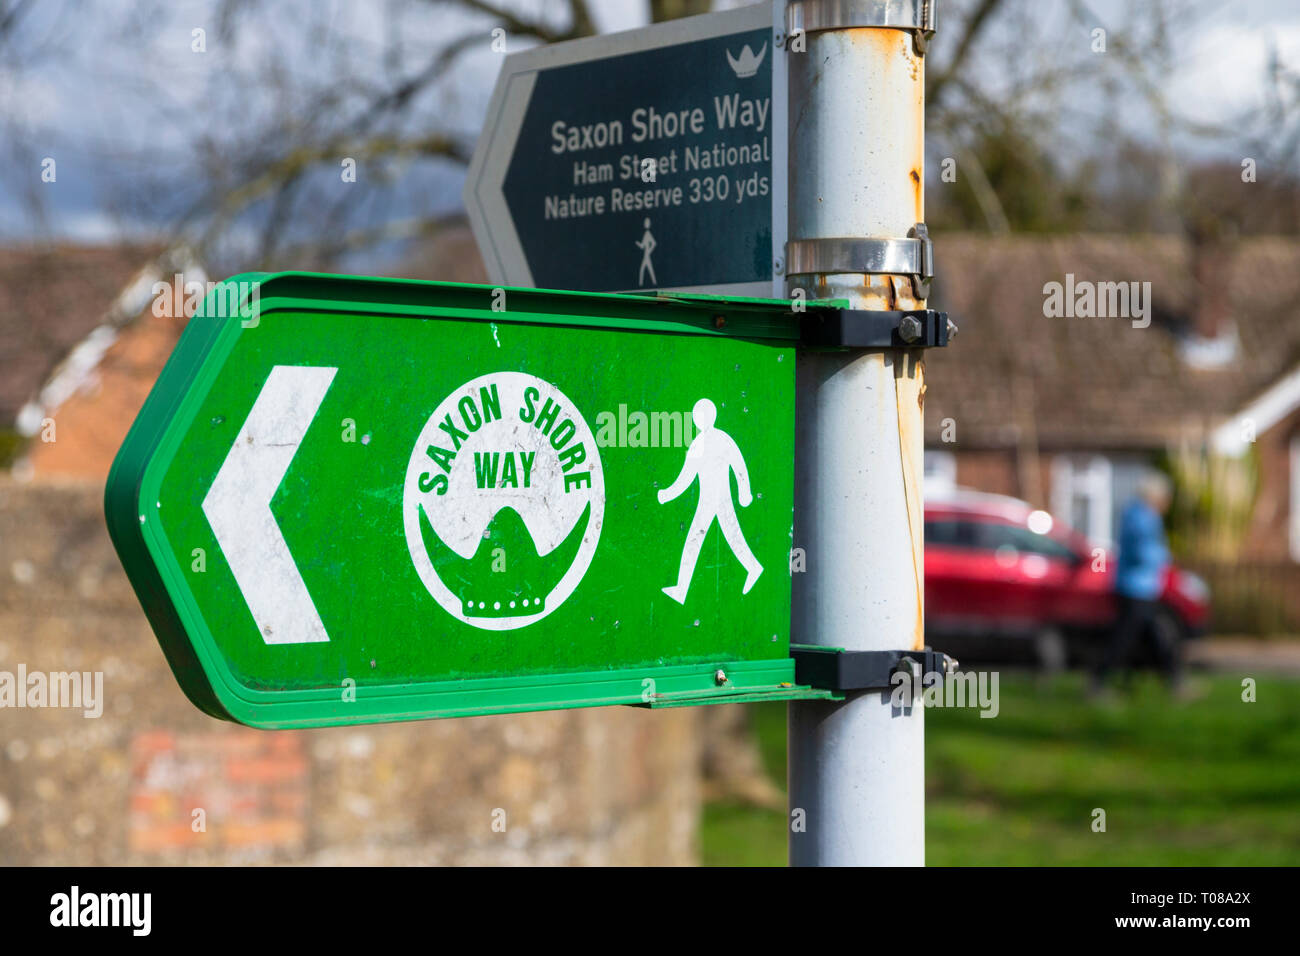 Fingerpost sign for Saxon shore way, hamstreet, ashford, kent, uk Stock Photo